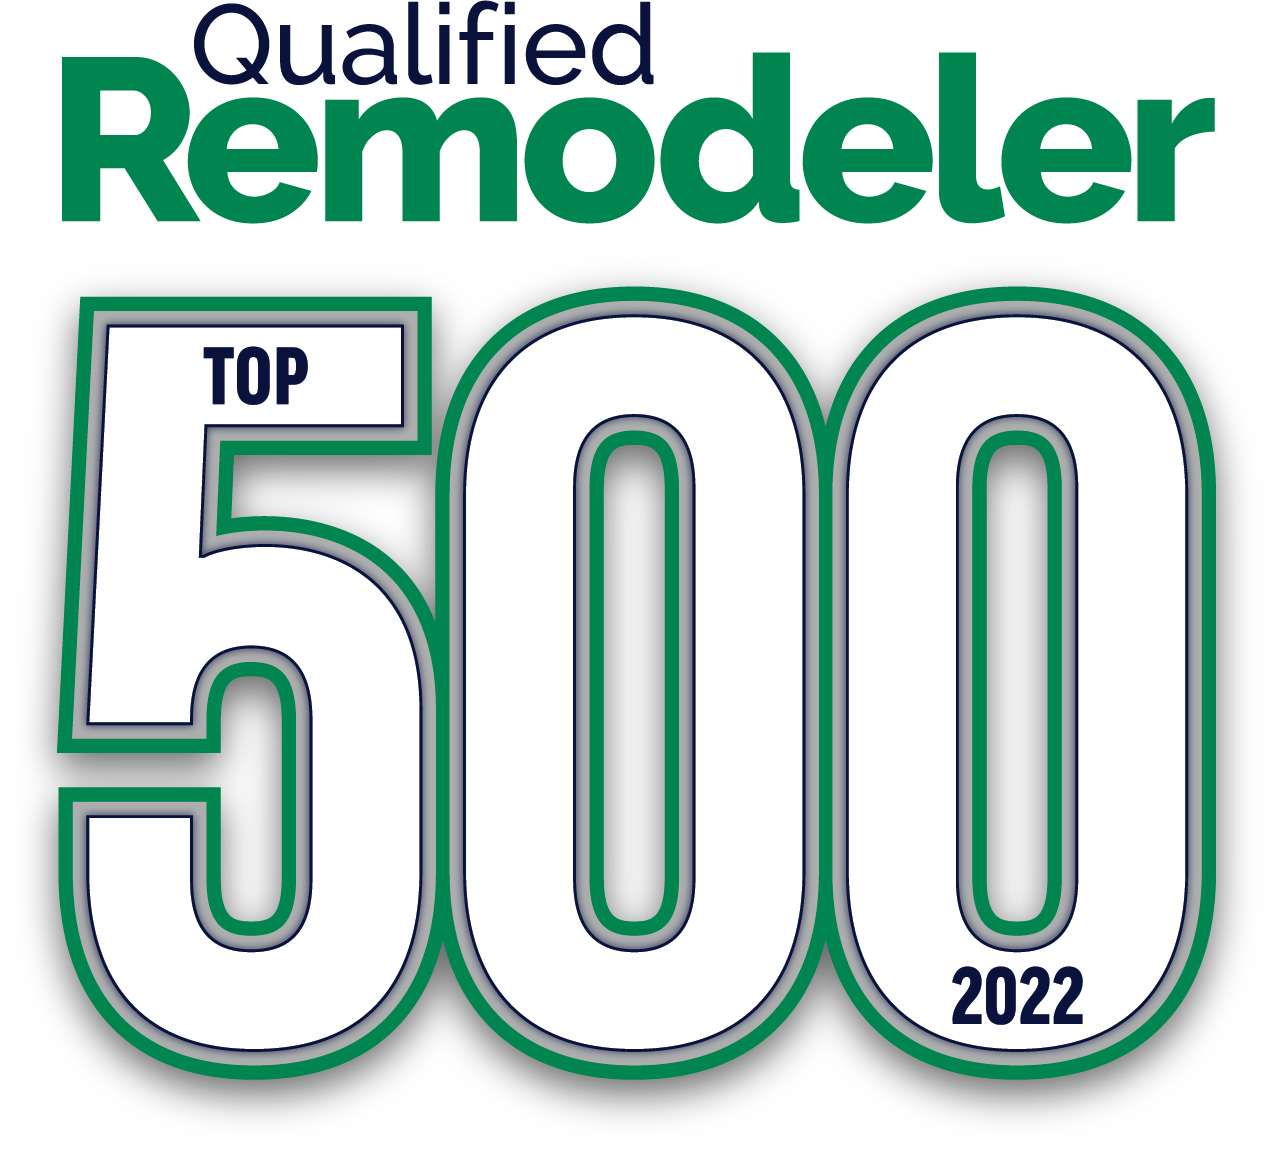 Qualified Remodeler Top 500